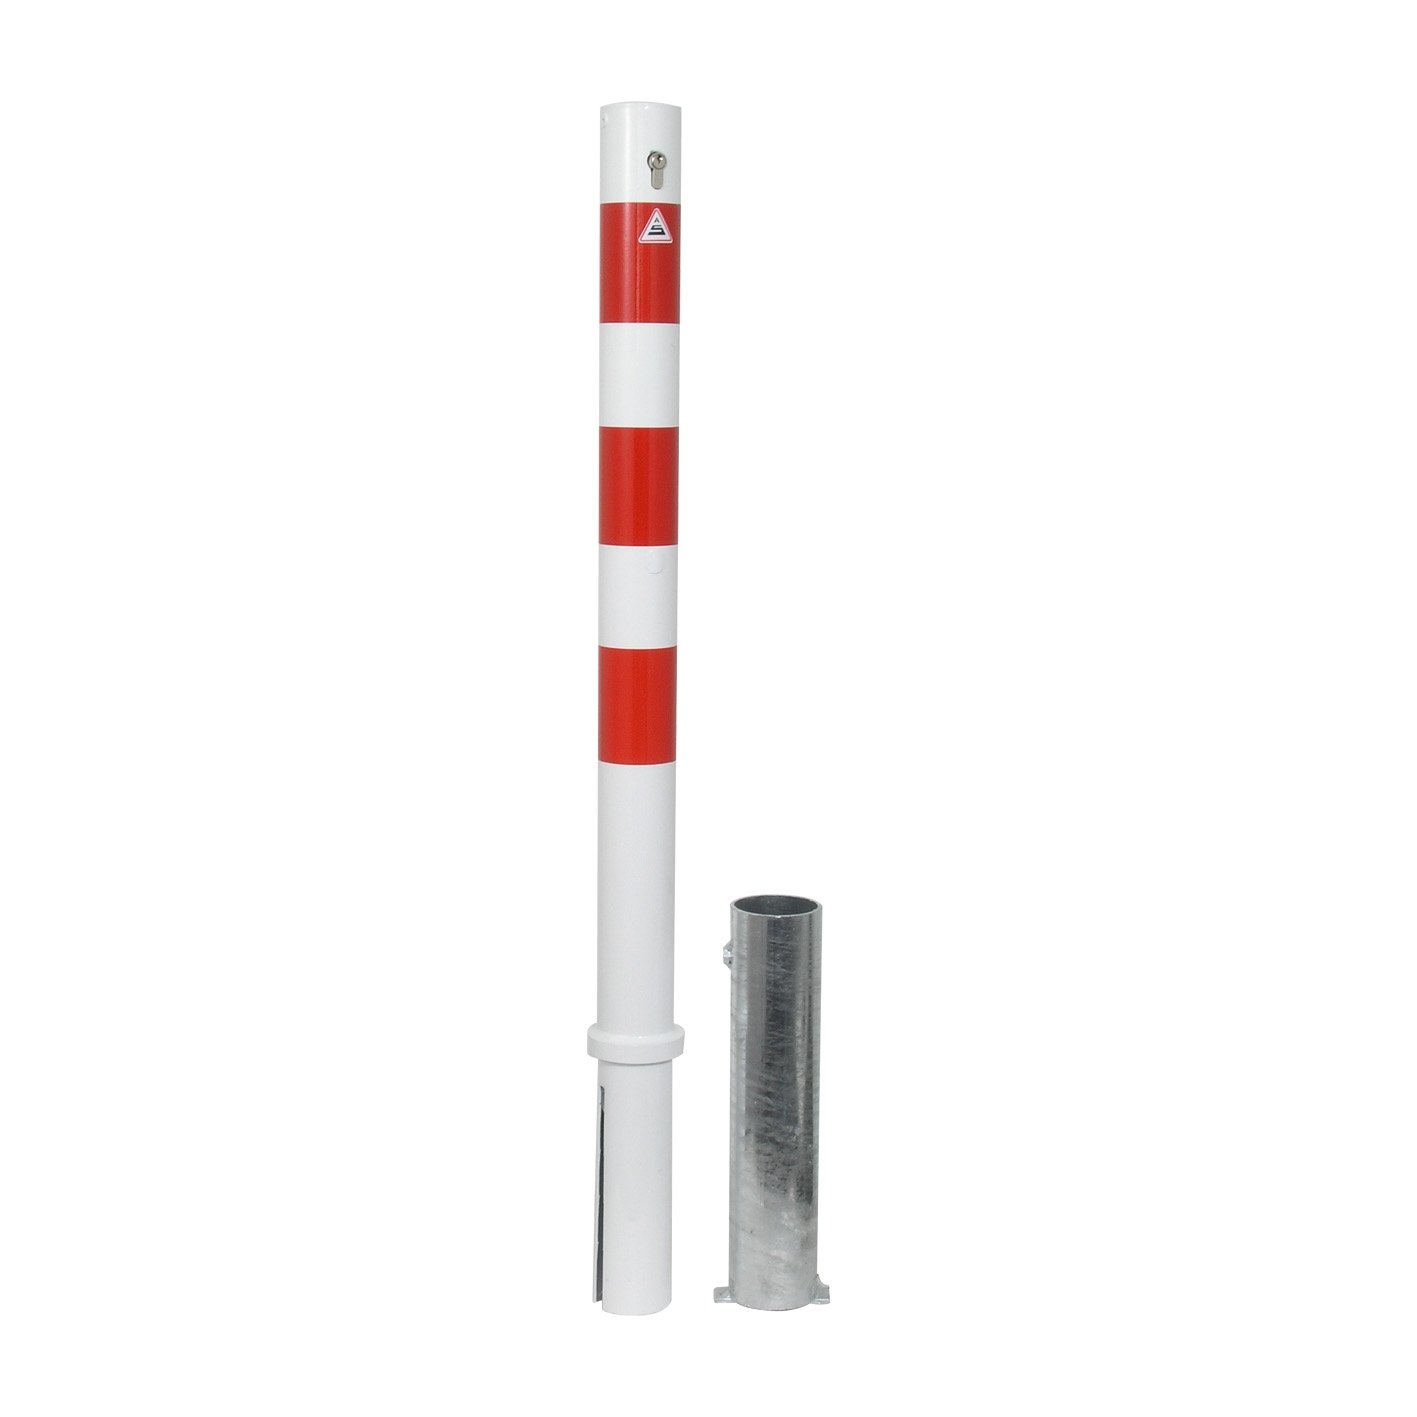 Parkeerpalen - Afzetpaal rond met grondhuls en cilinderslot rood-wit Ø 76mm